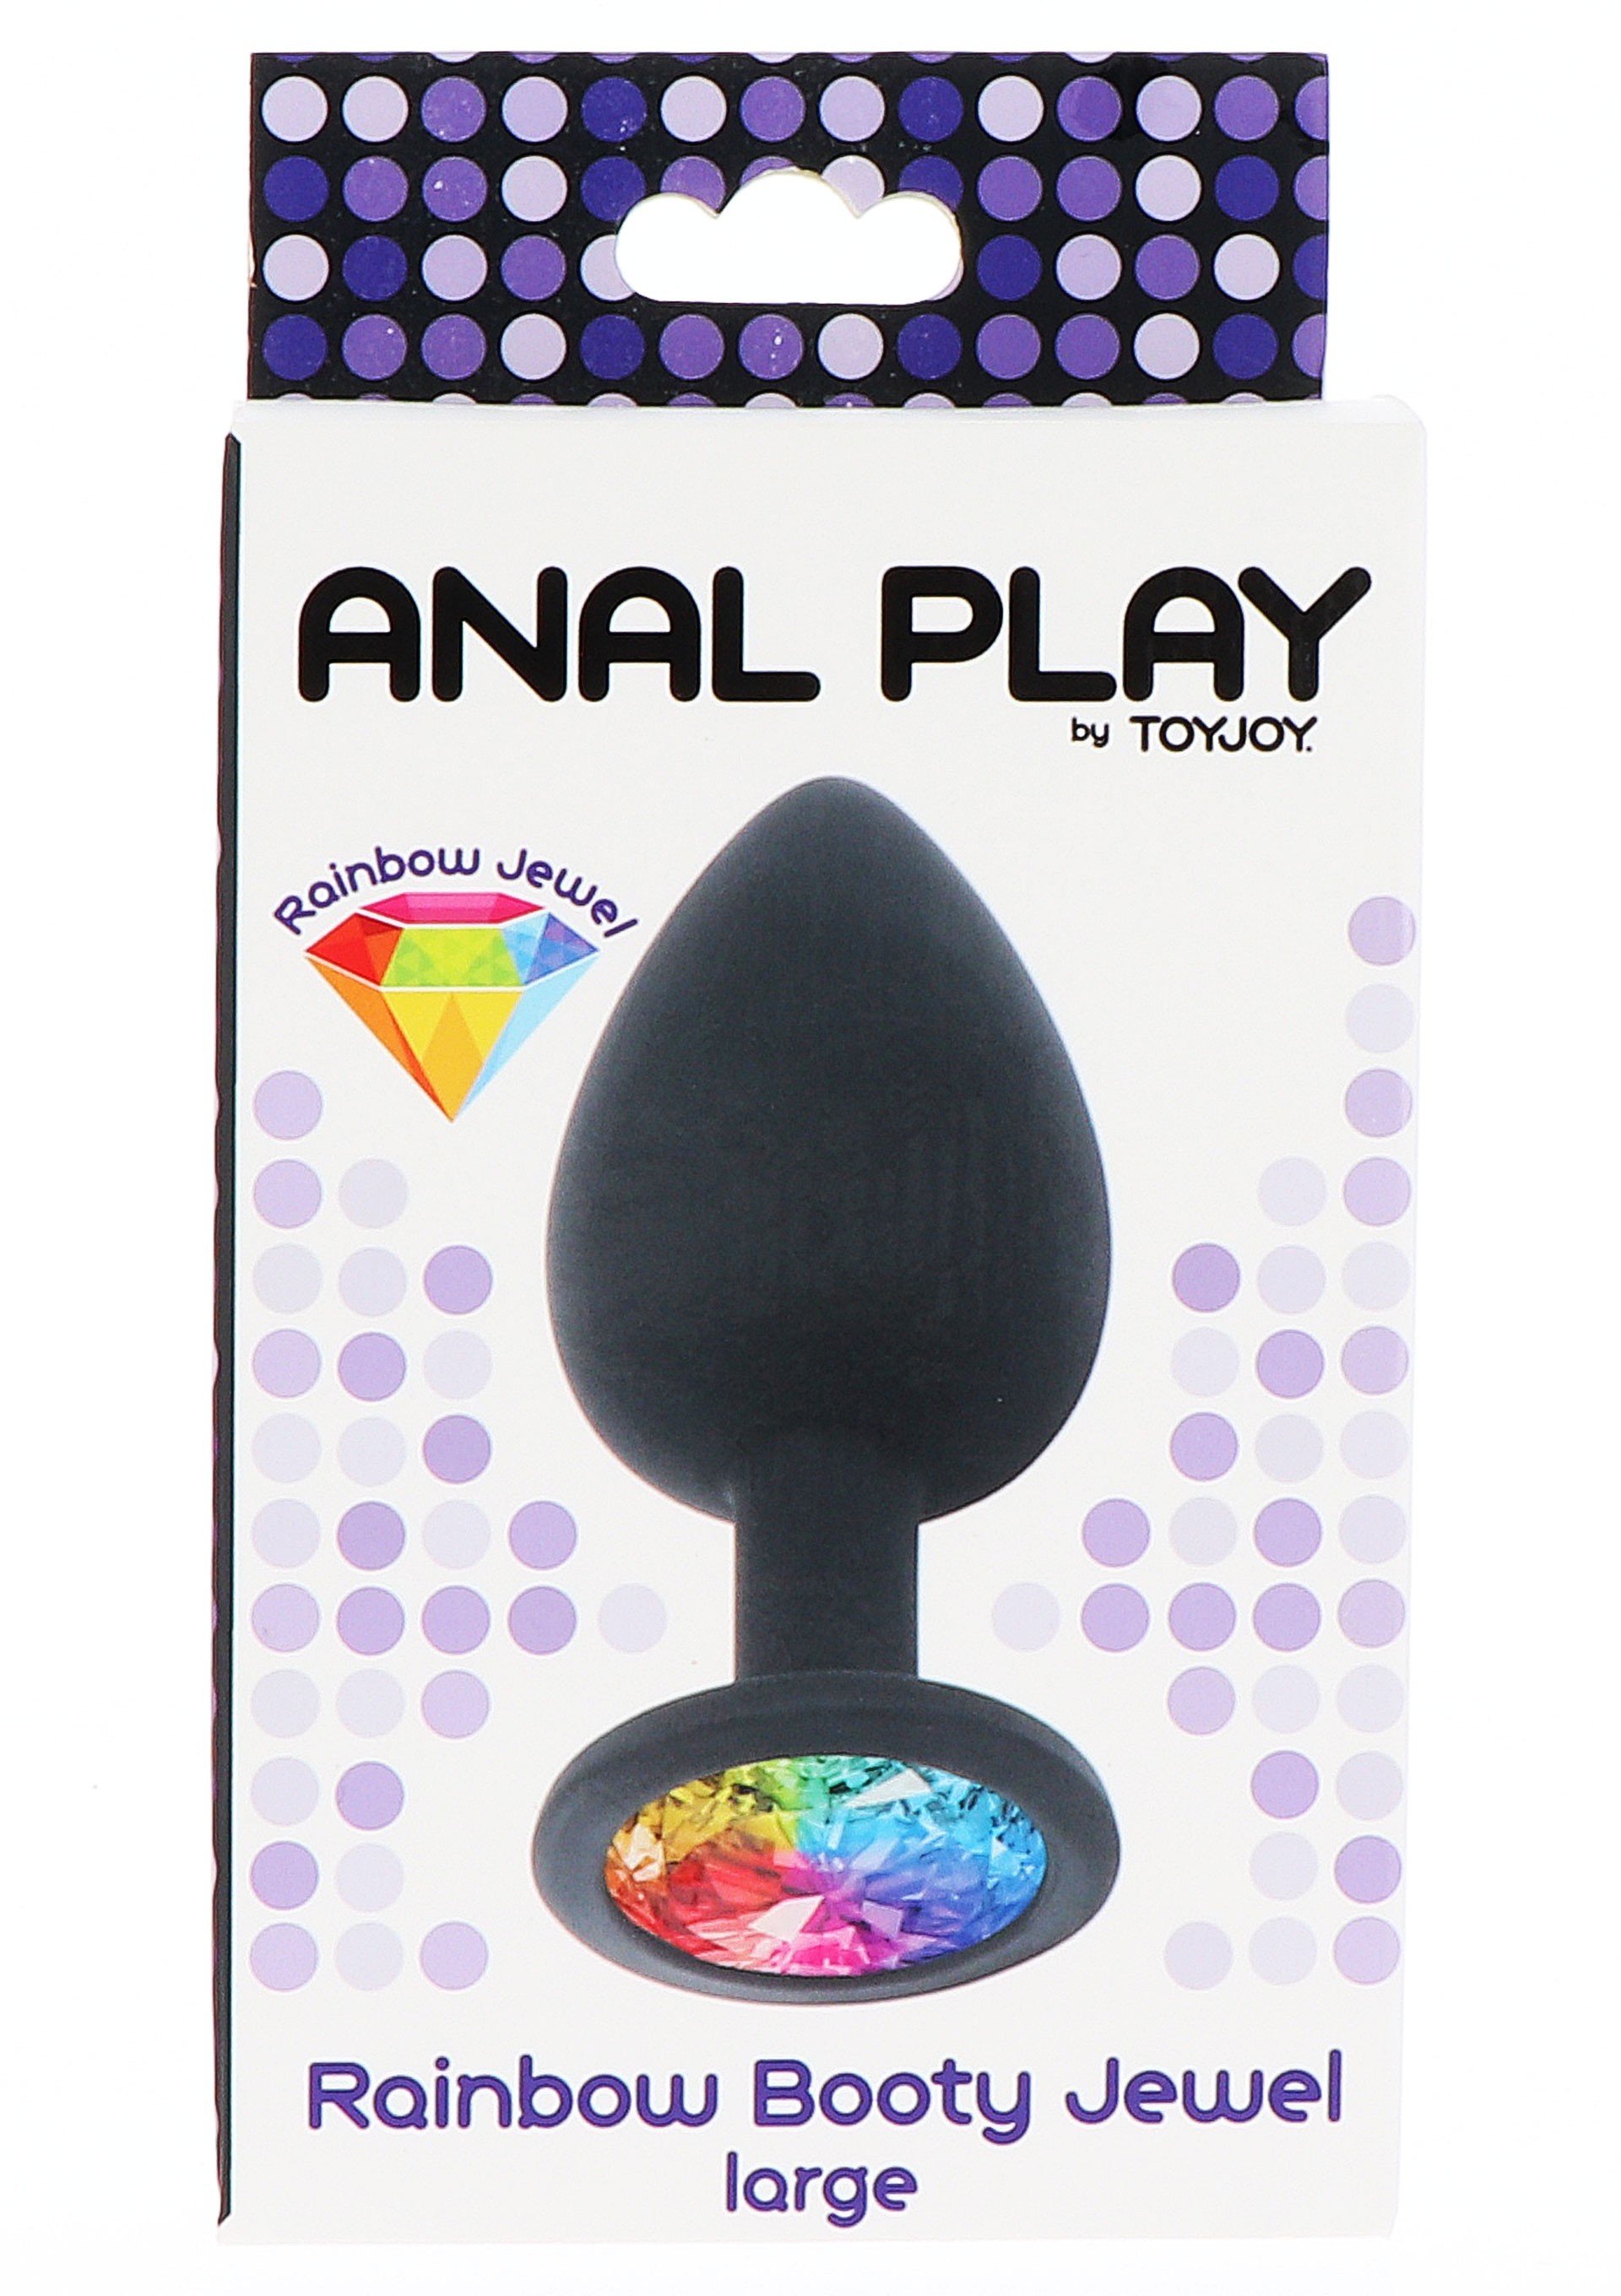 Toy Joy Rainbow Booty Jewel Large Anal Plug